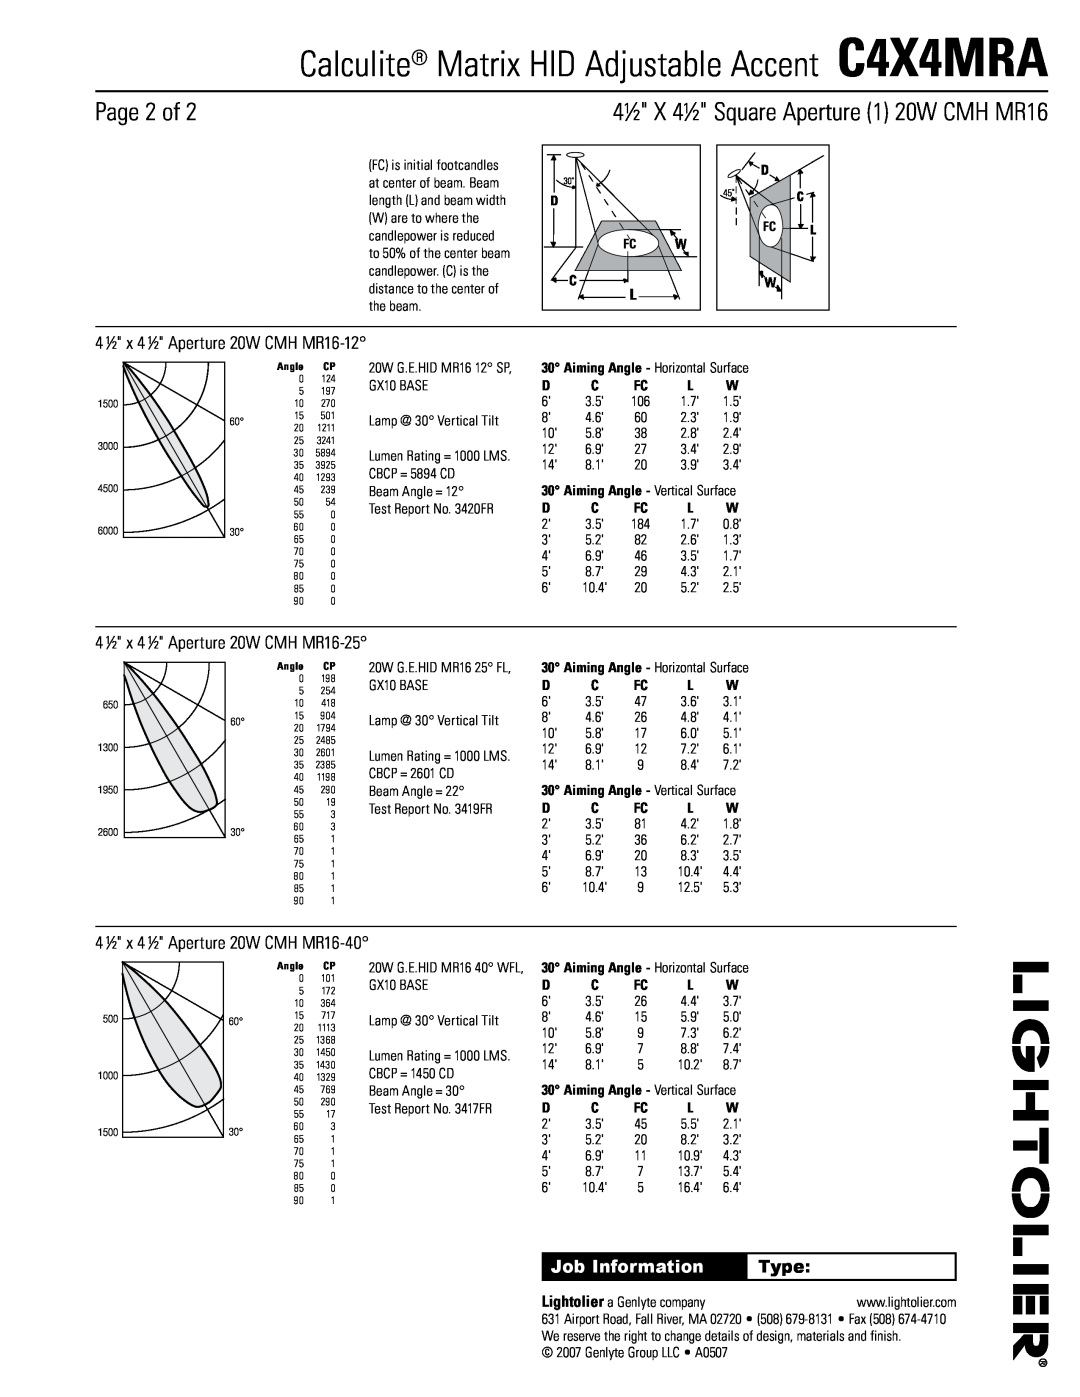 Lightolier Page 2 of, Calculite Matrix HID Adjustable Accent C4X4MRA, 4½ X 4½ Square Aperture 1 20W CMH MR16, Type 